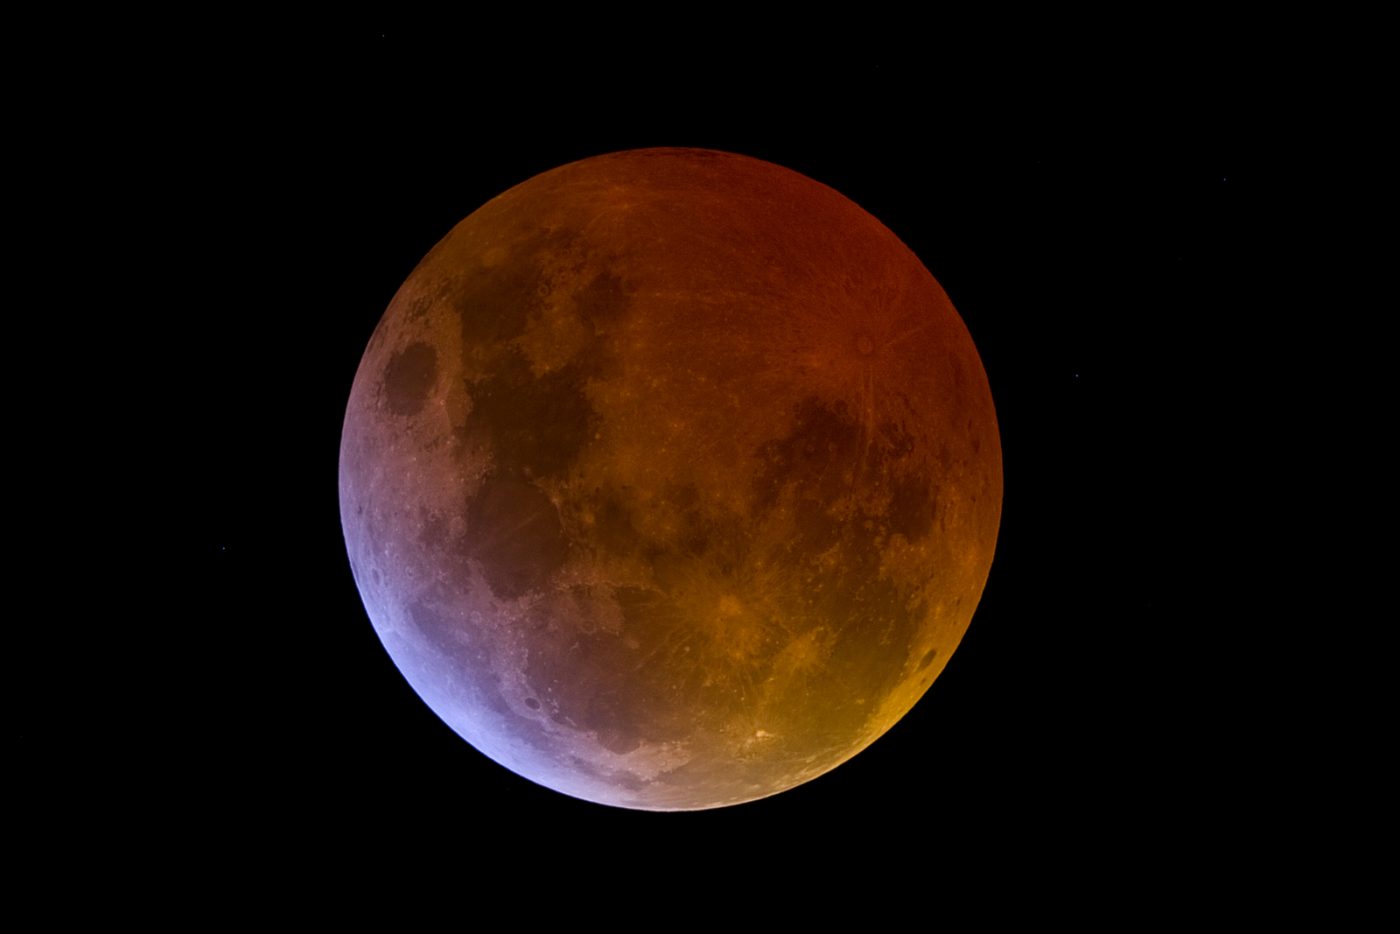 About Lunar Eclipse Data